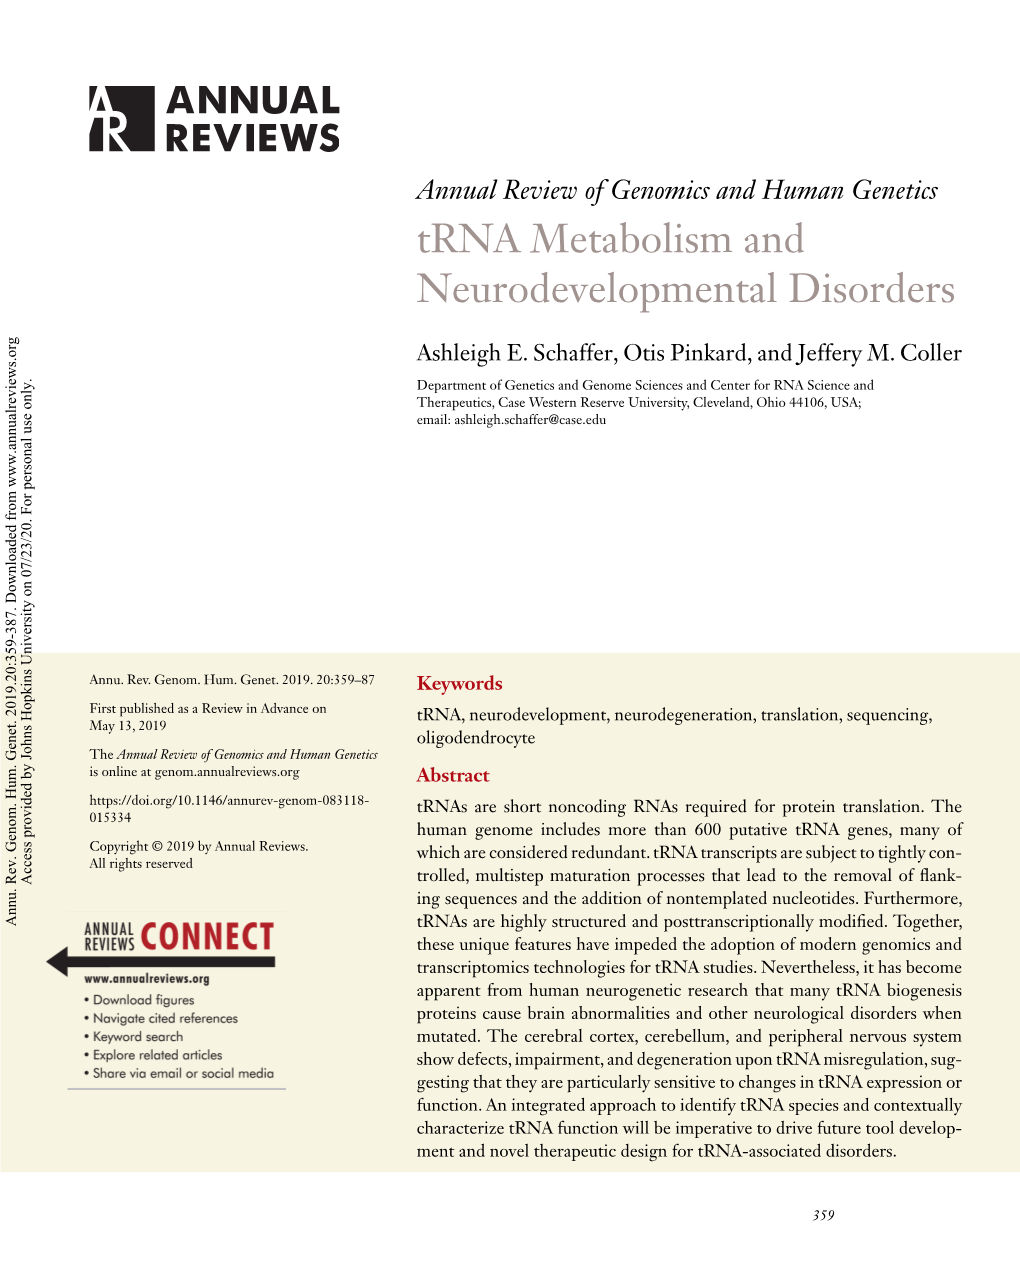 Trna Metabolism and Neurodevelopmental Disorders